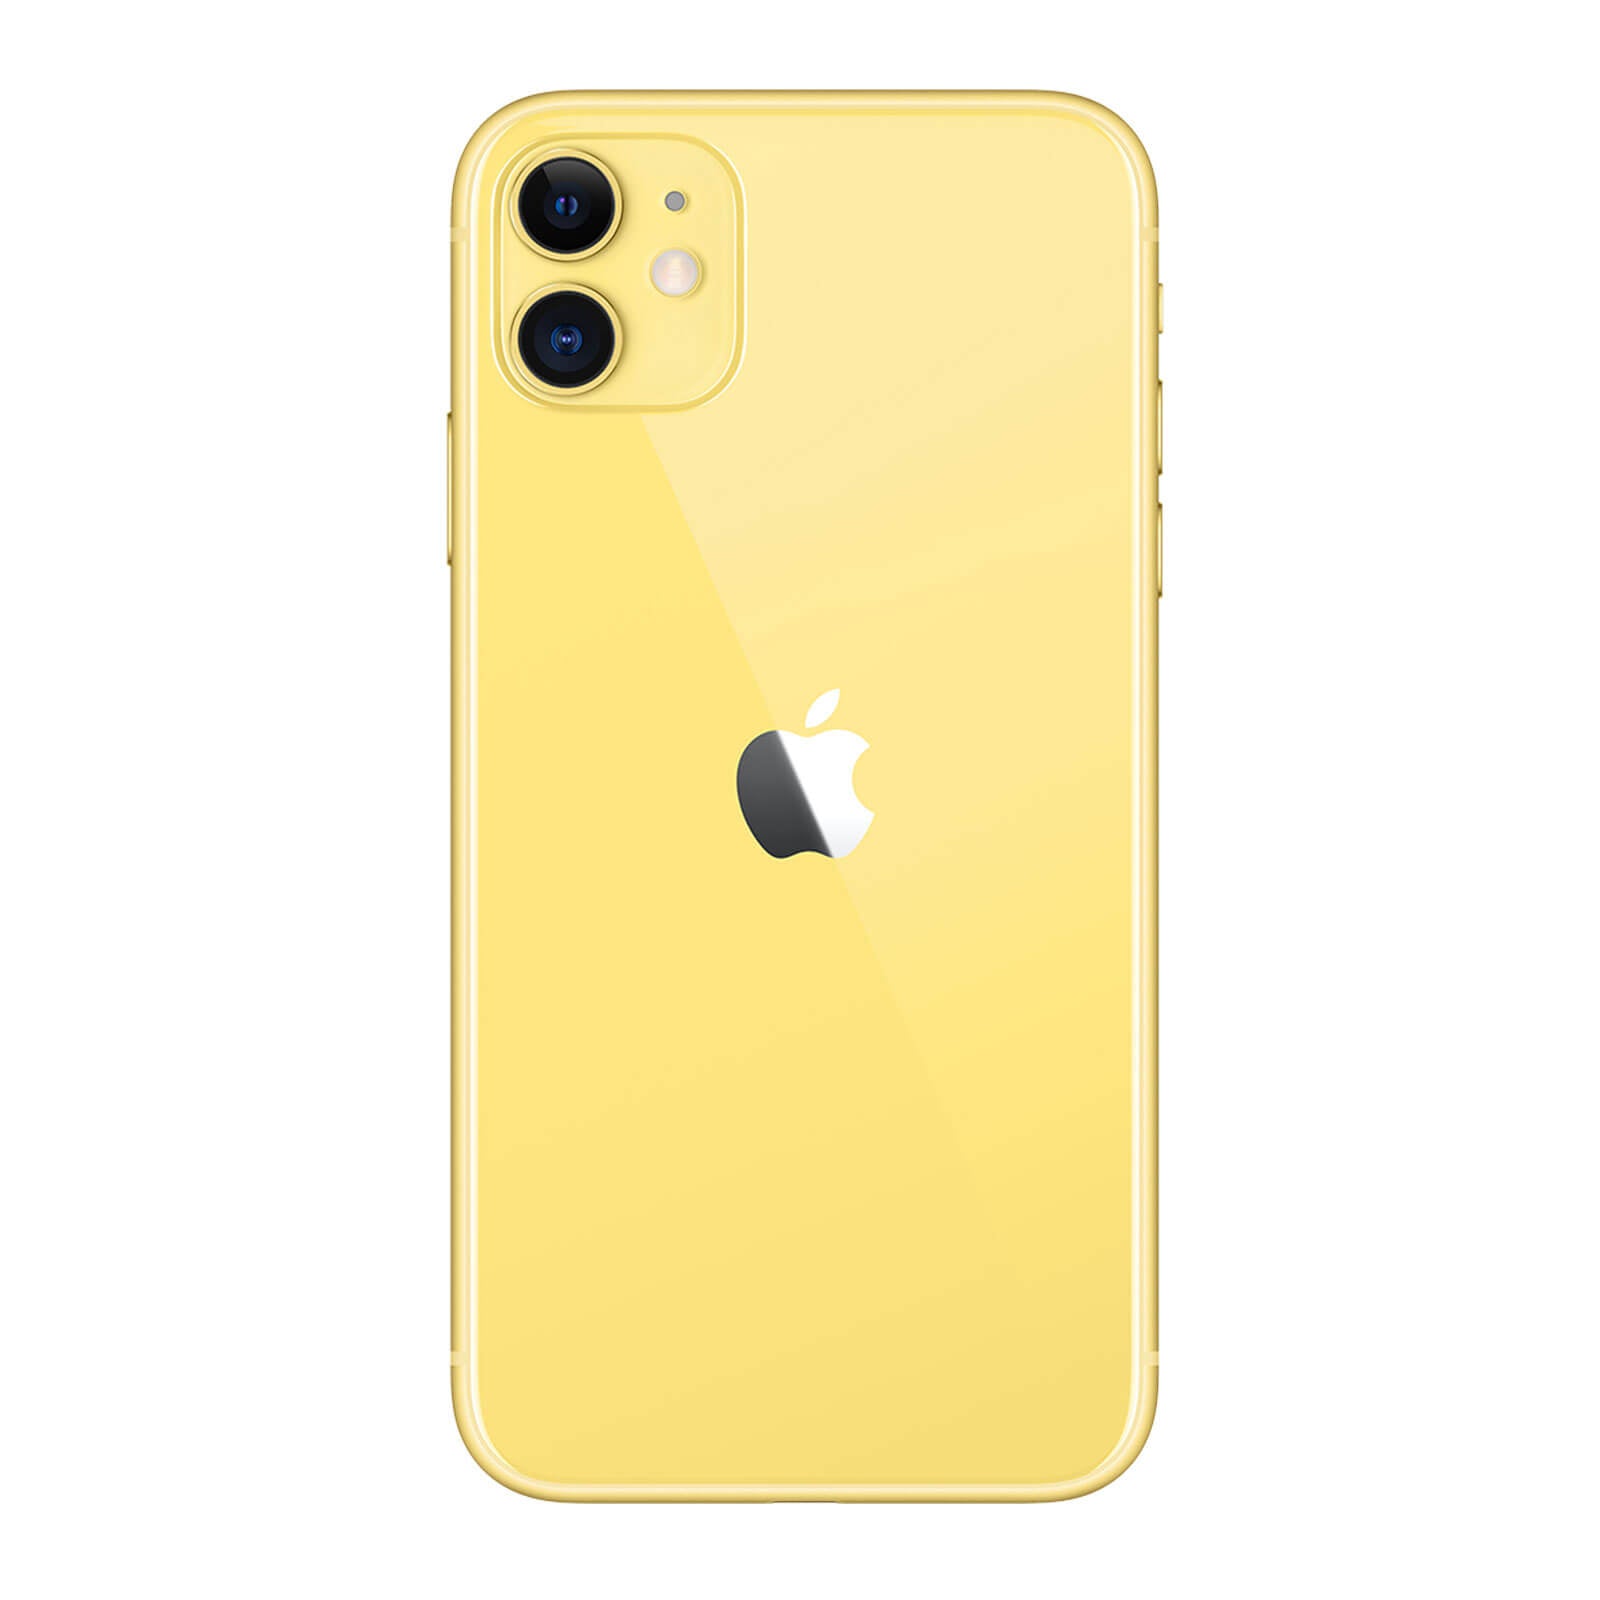 Apple iPhone 11 128GB Yellow Pristine - Sprint